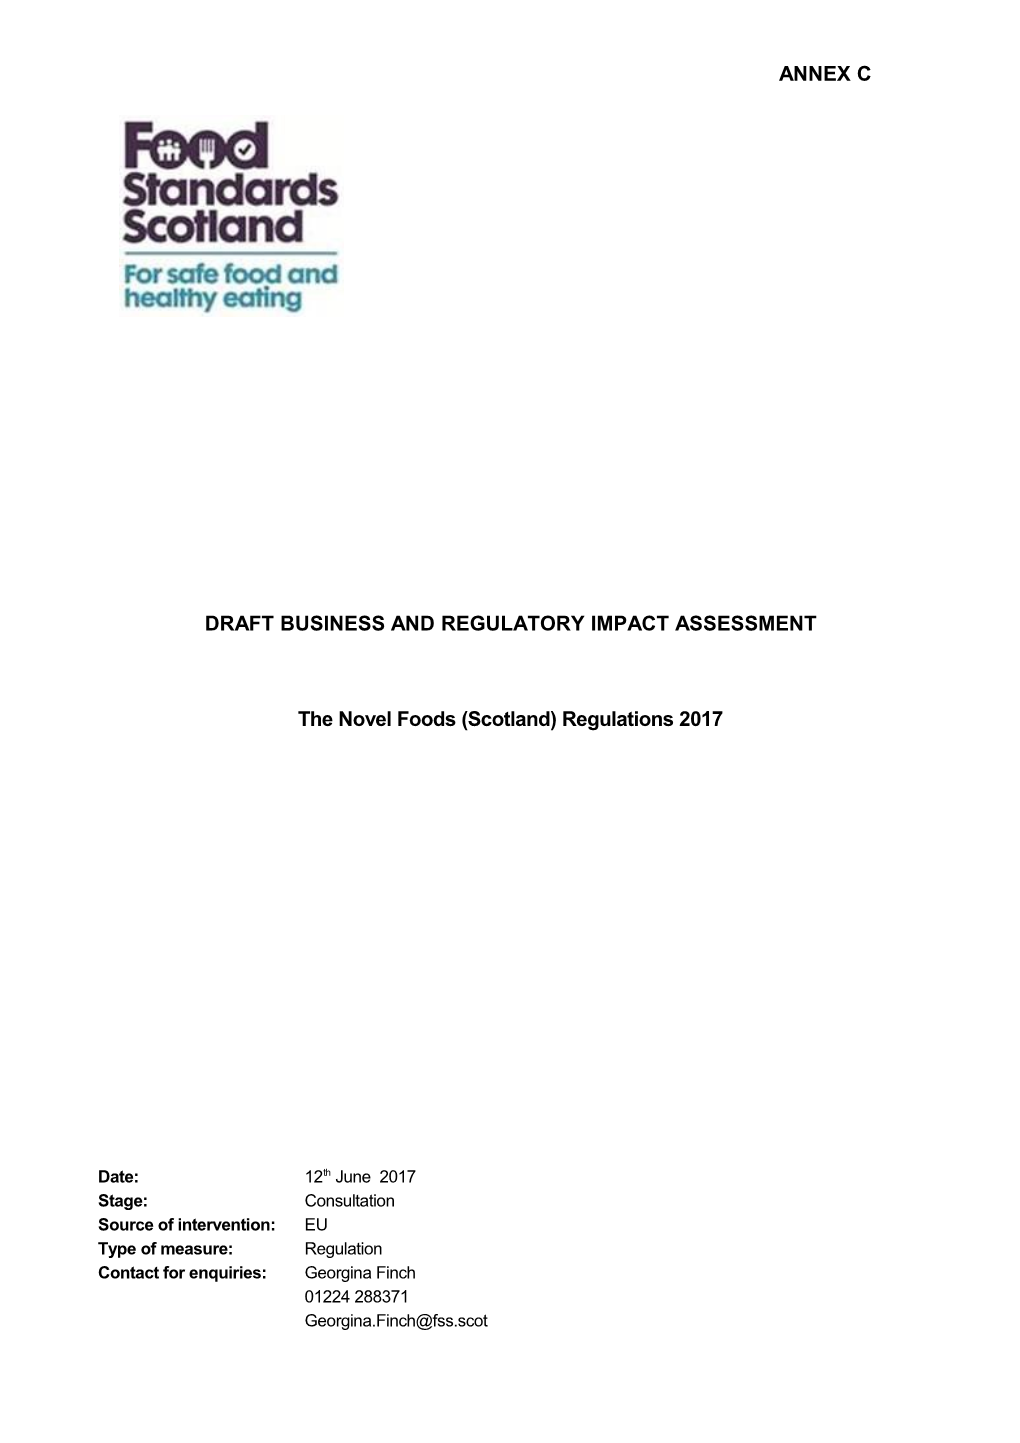 DRAFT BUSINESS and Regulatory Impact Assessment